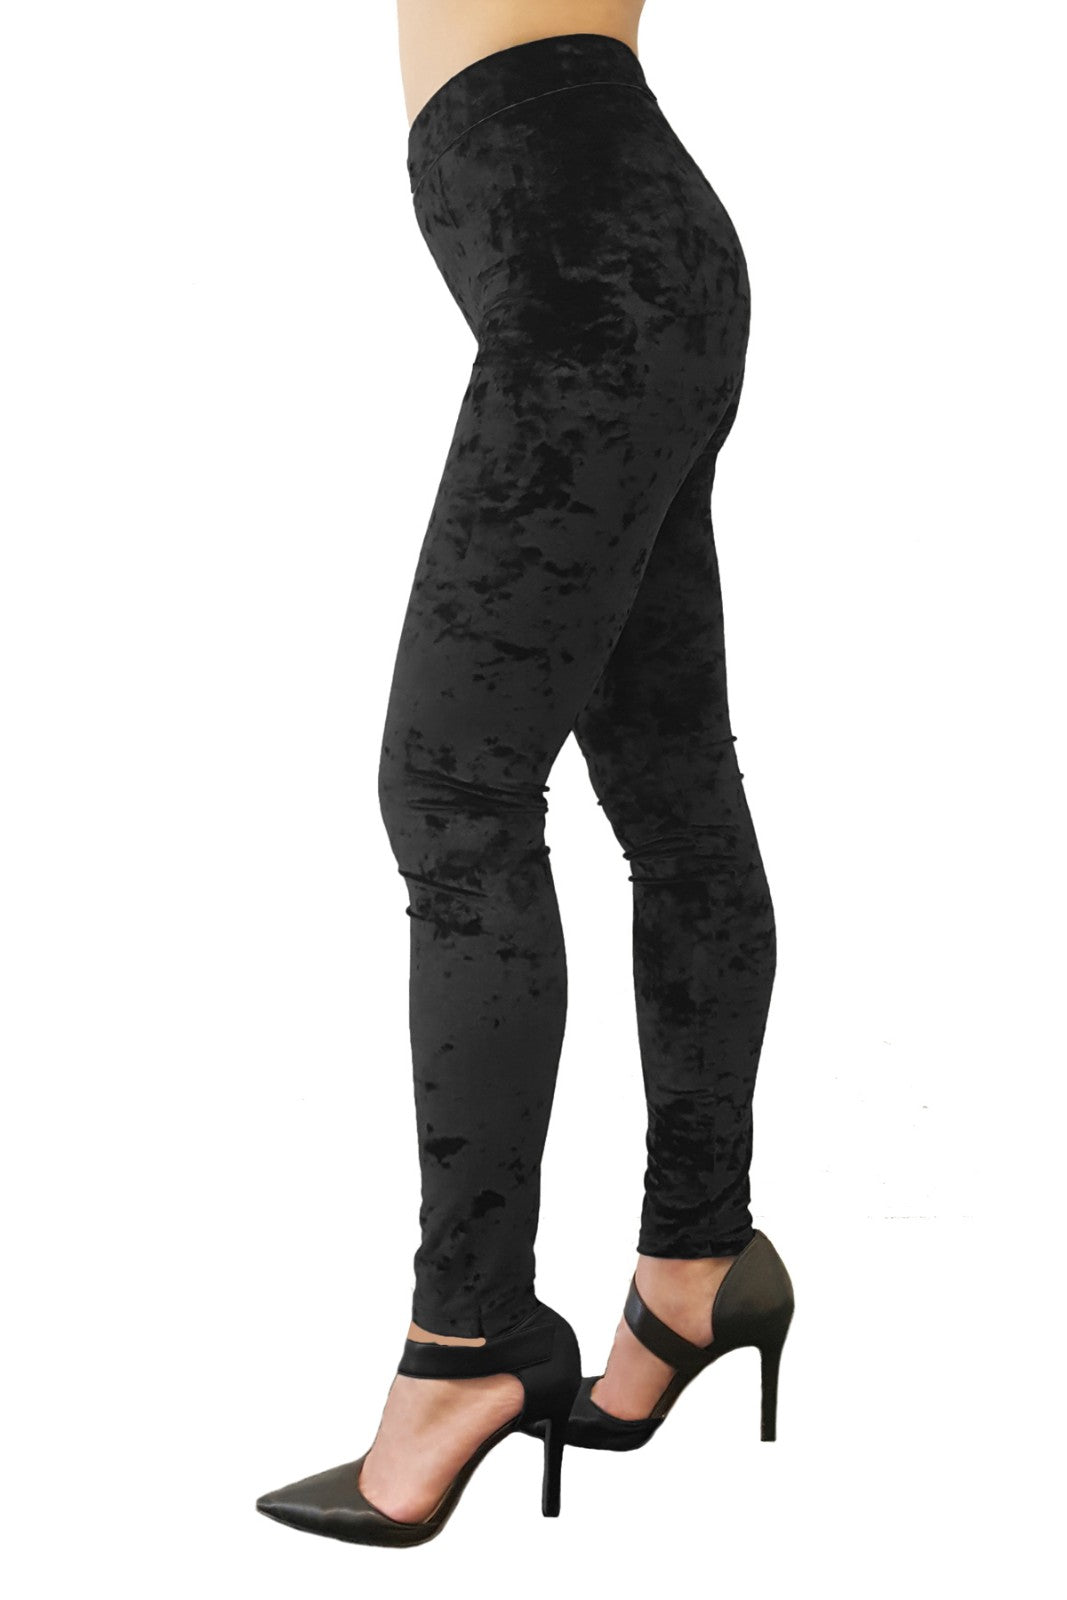 Luxury Divas Black & Aqua Blue Ombre Striped Workout Leggings Size Medium  at Amazon Women's Clothing store